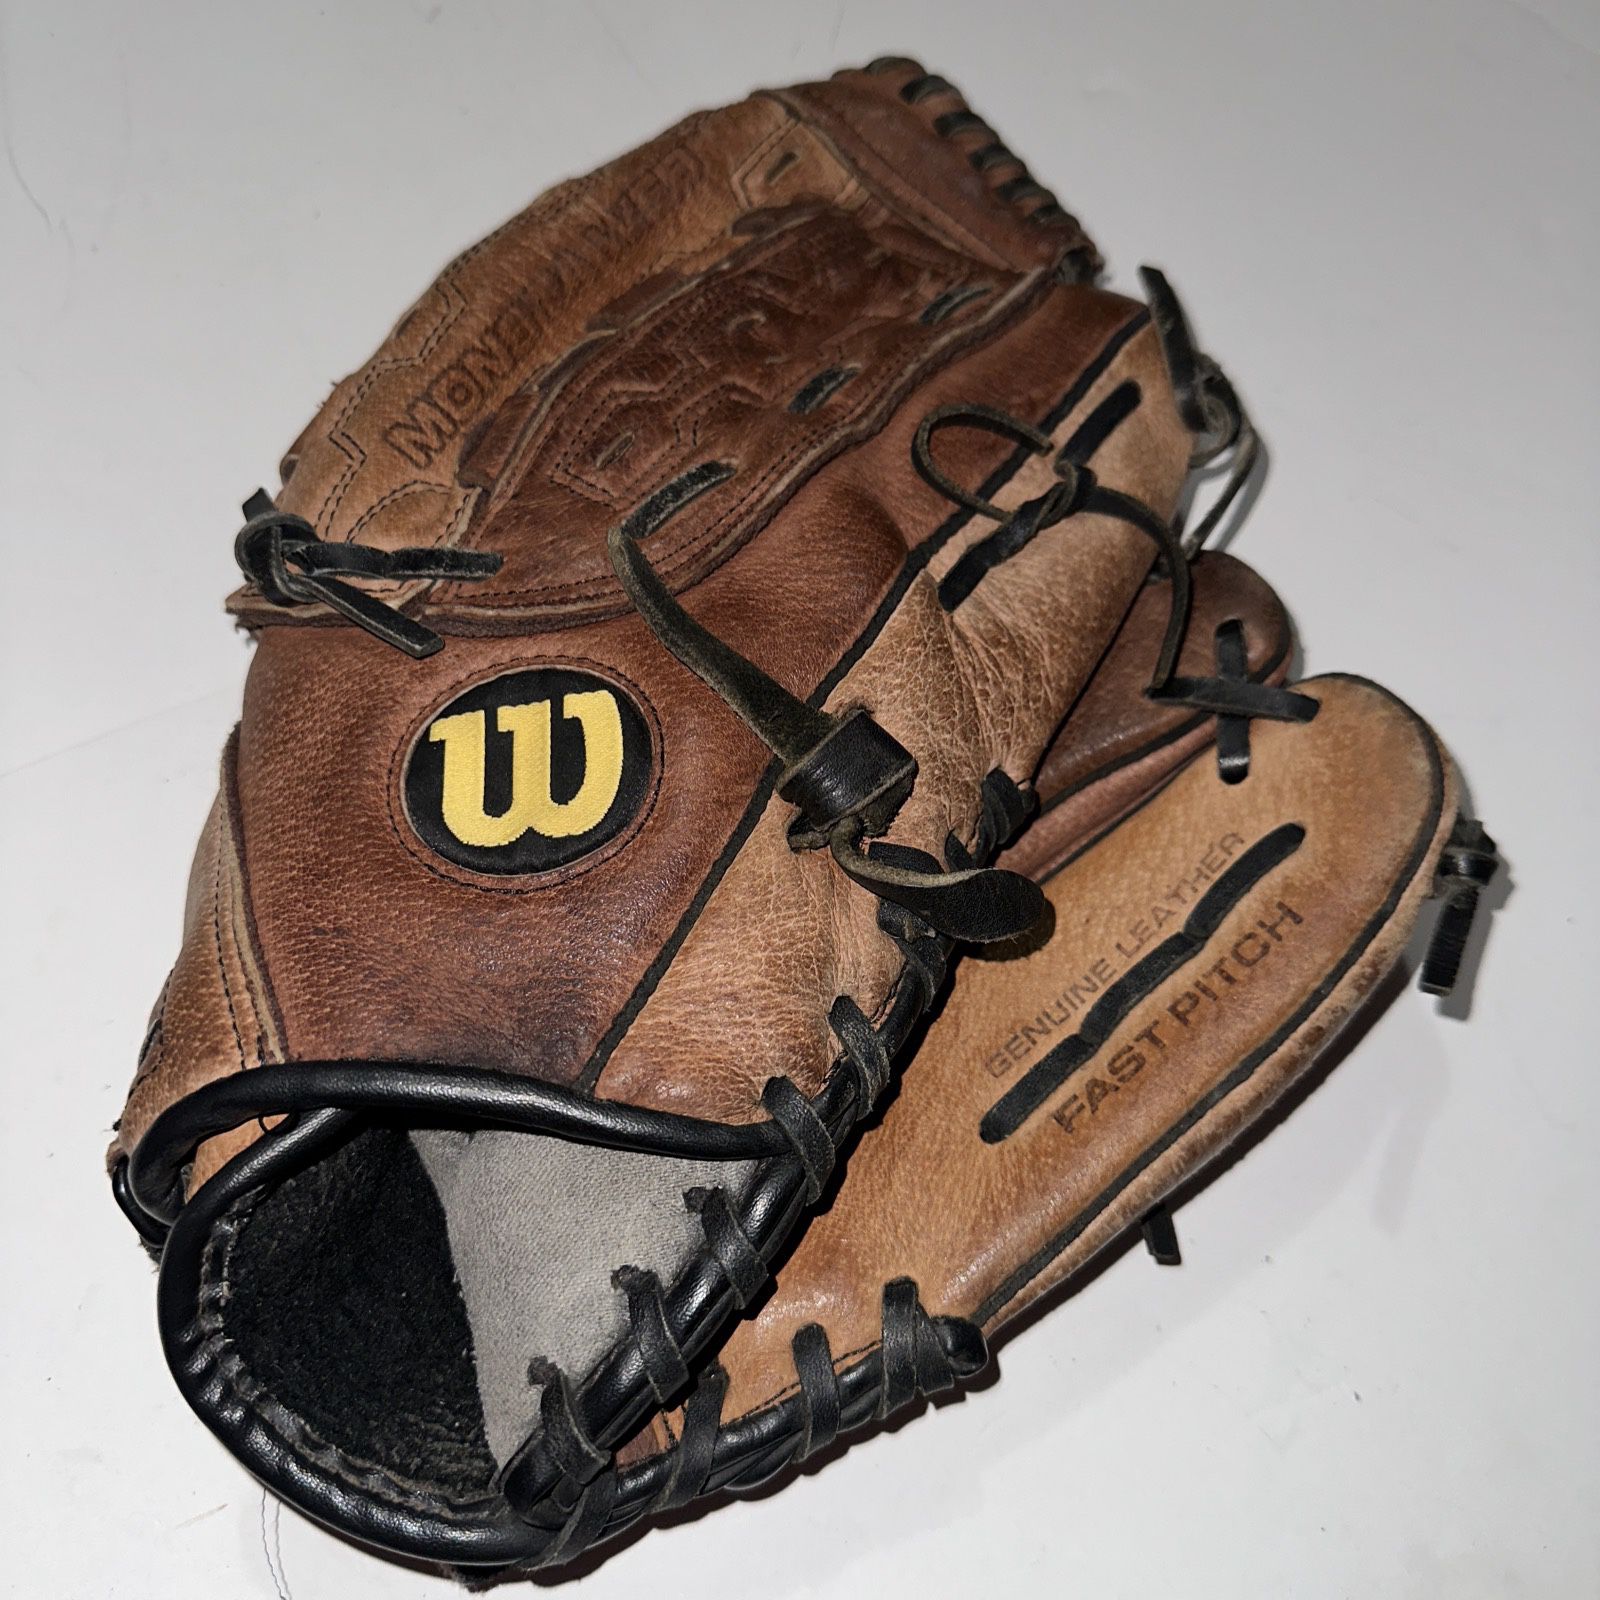 Wilson A0440 FP12 Fastpitch 12" Softball Glove, Mitt Brown Leather RHT